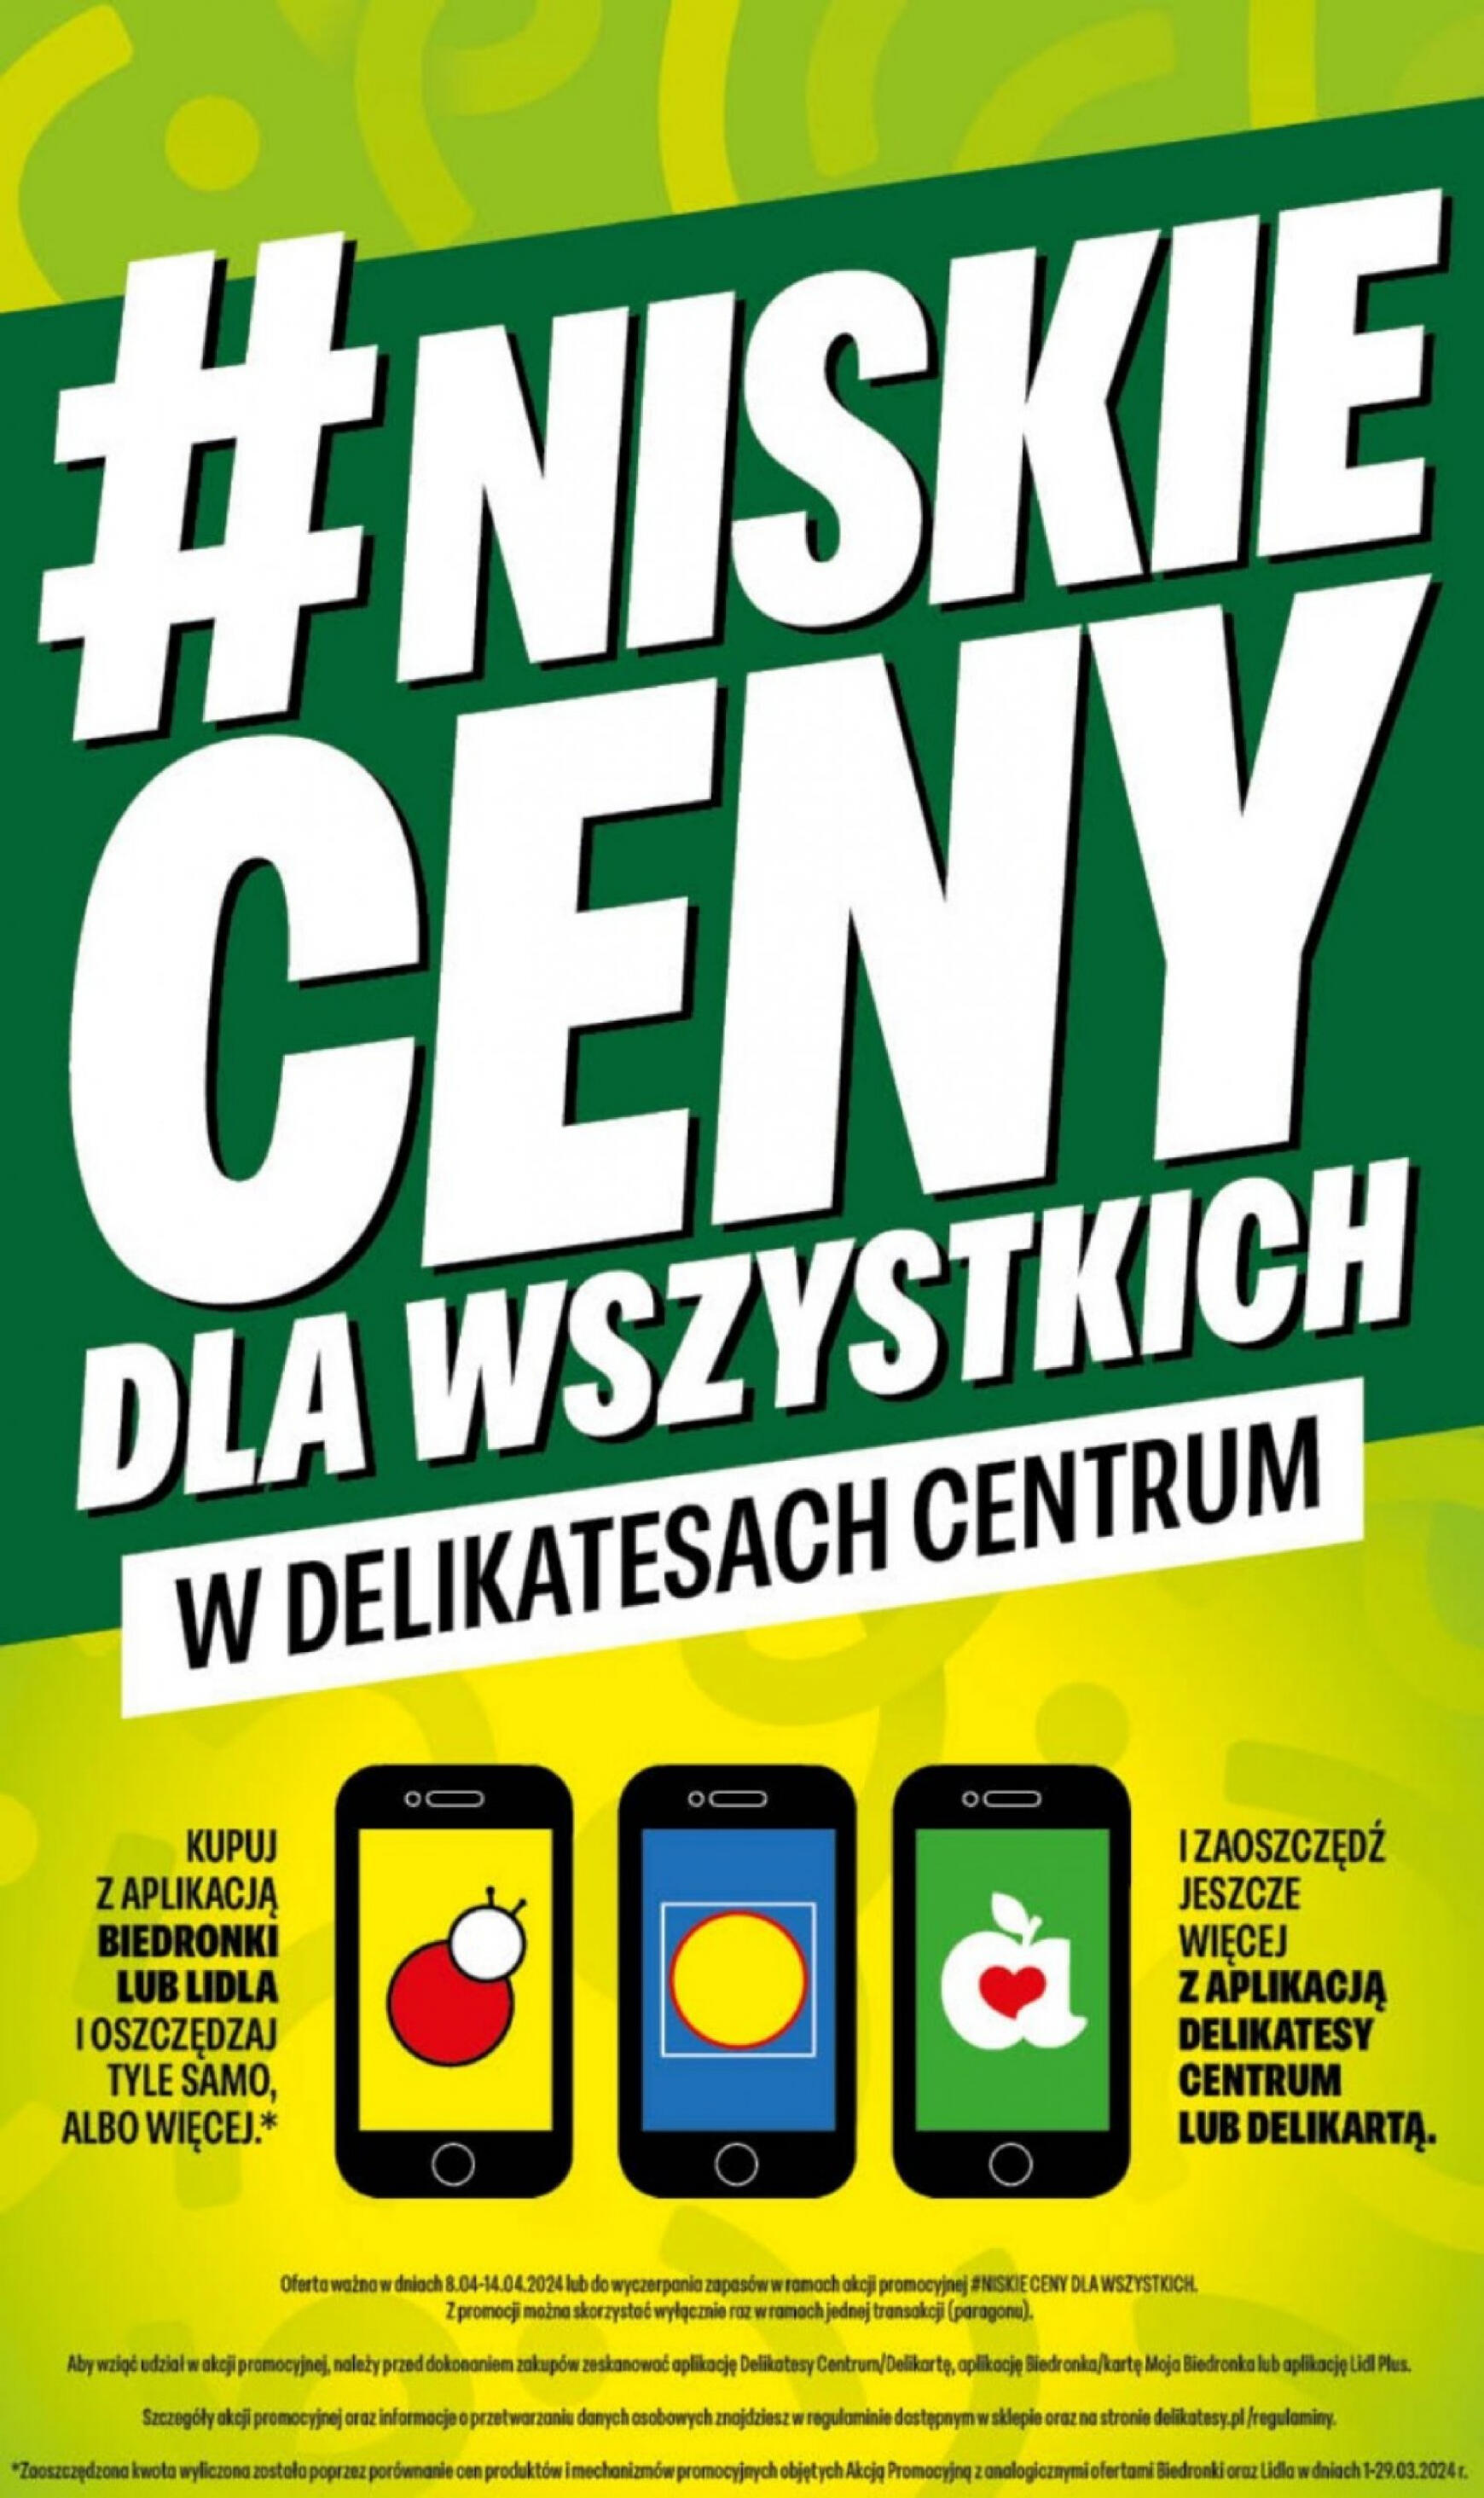 delikatesy-centrum - Delikatesy Centrum gazetka aktualna ważna od 08.04. - 14.04. - page: 1